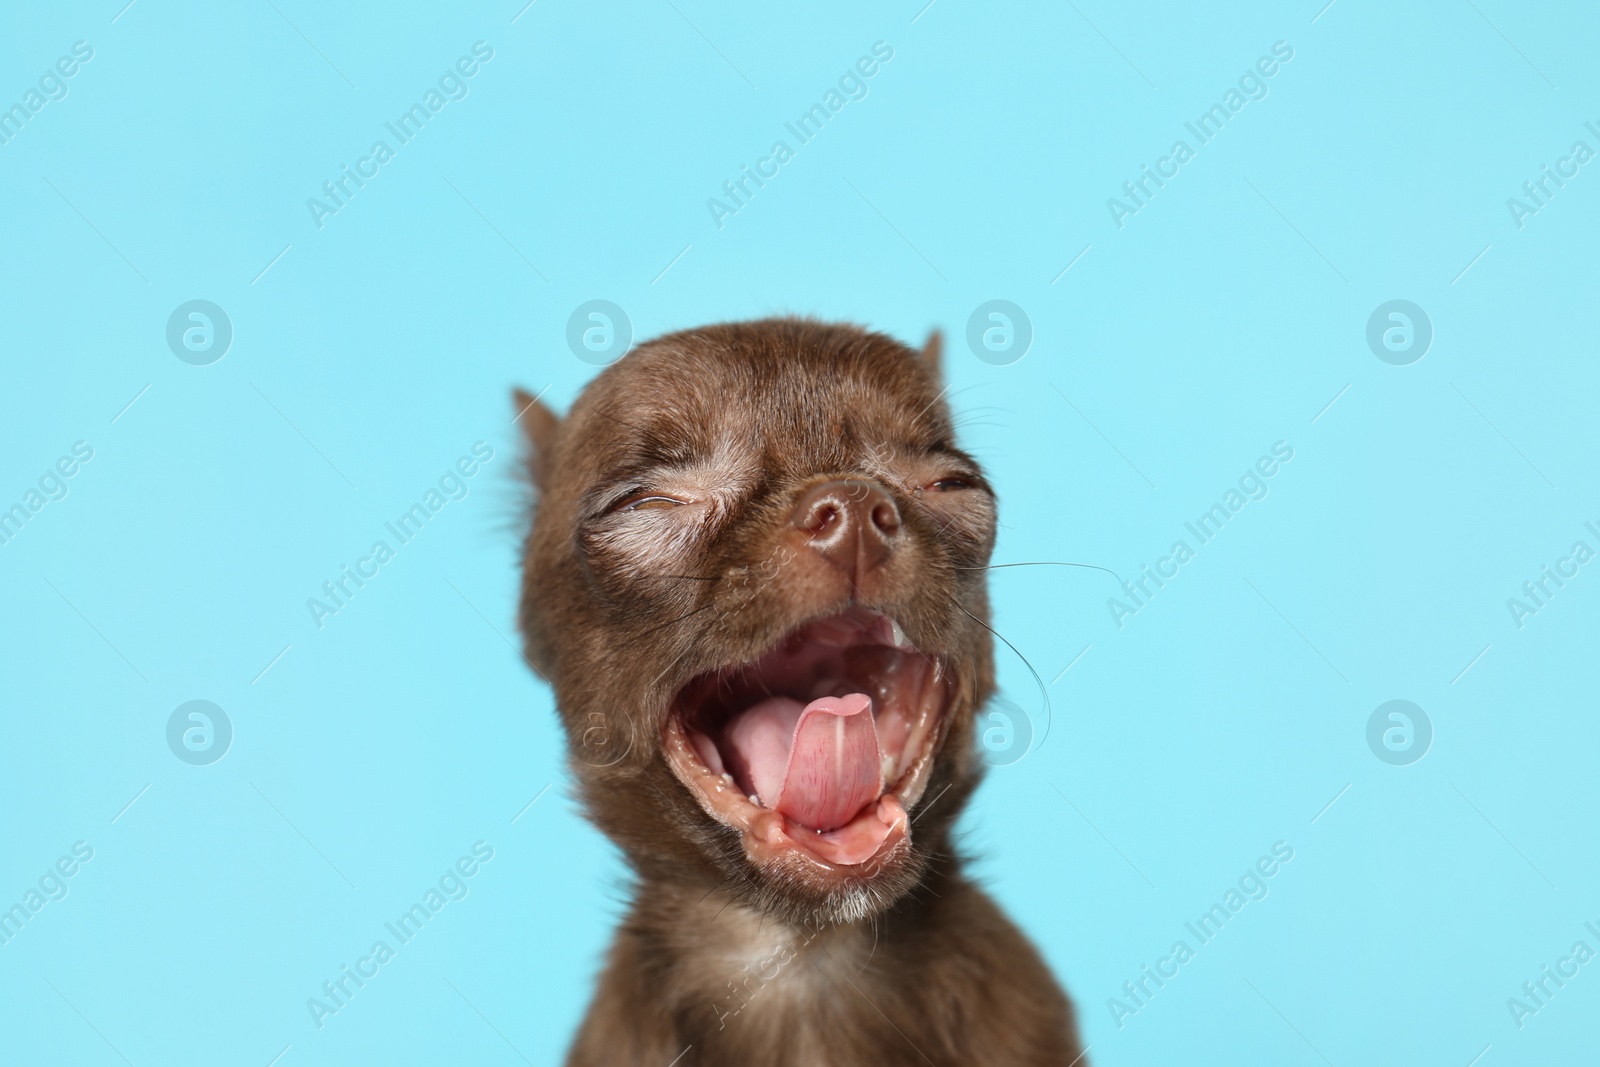 Photo of Cute small Chihuahua dog yawning on light blue background